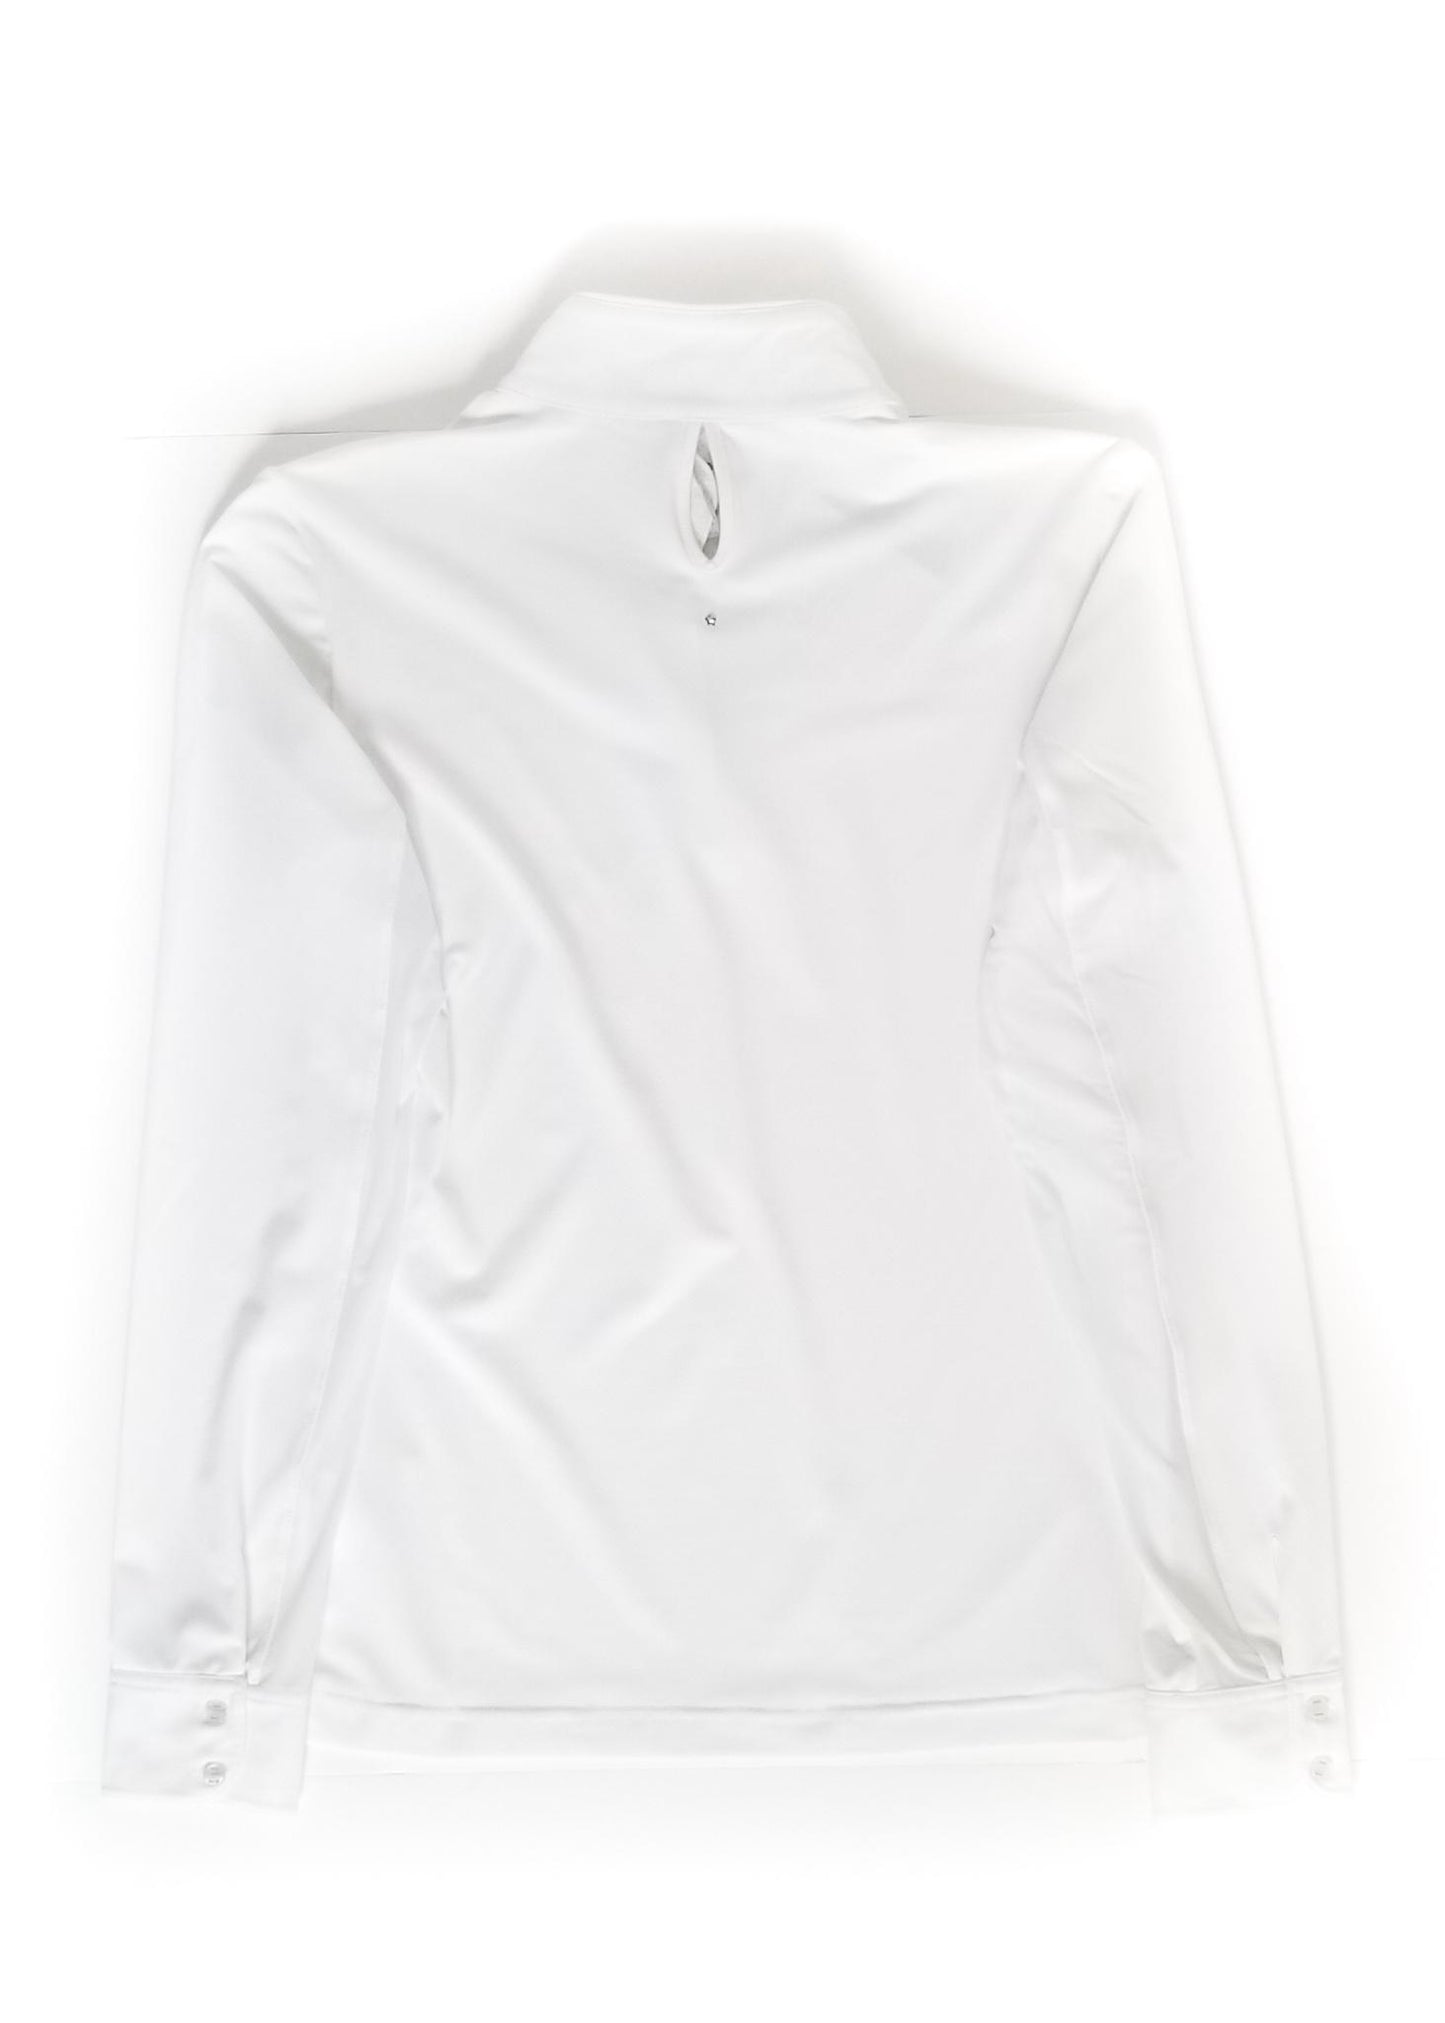 Samshield Juline Show Shirt - White - Medium